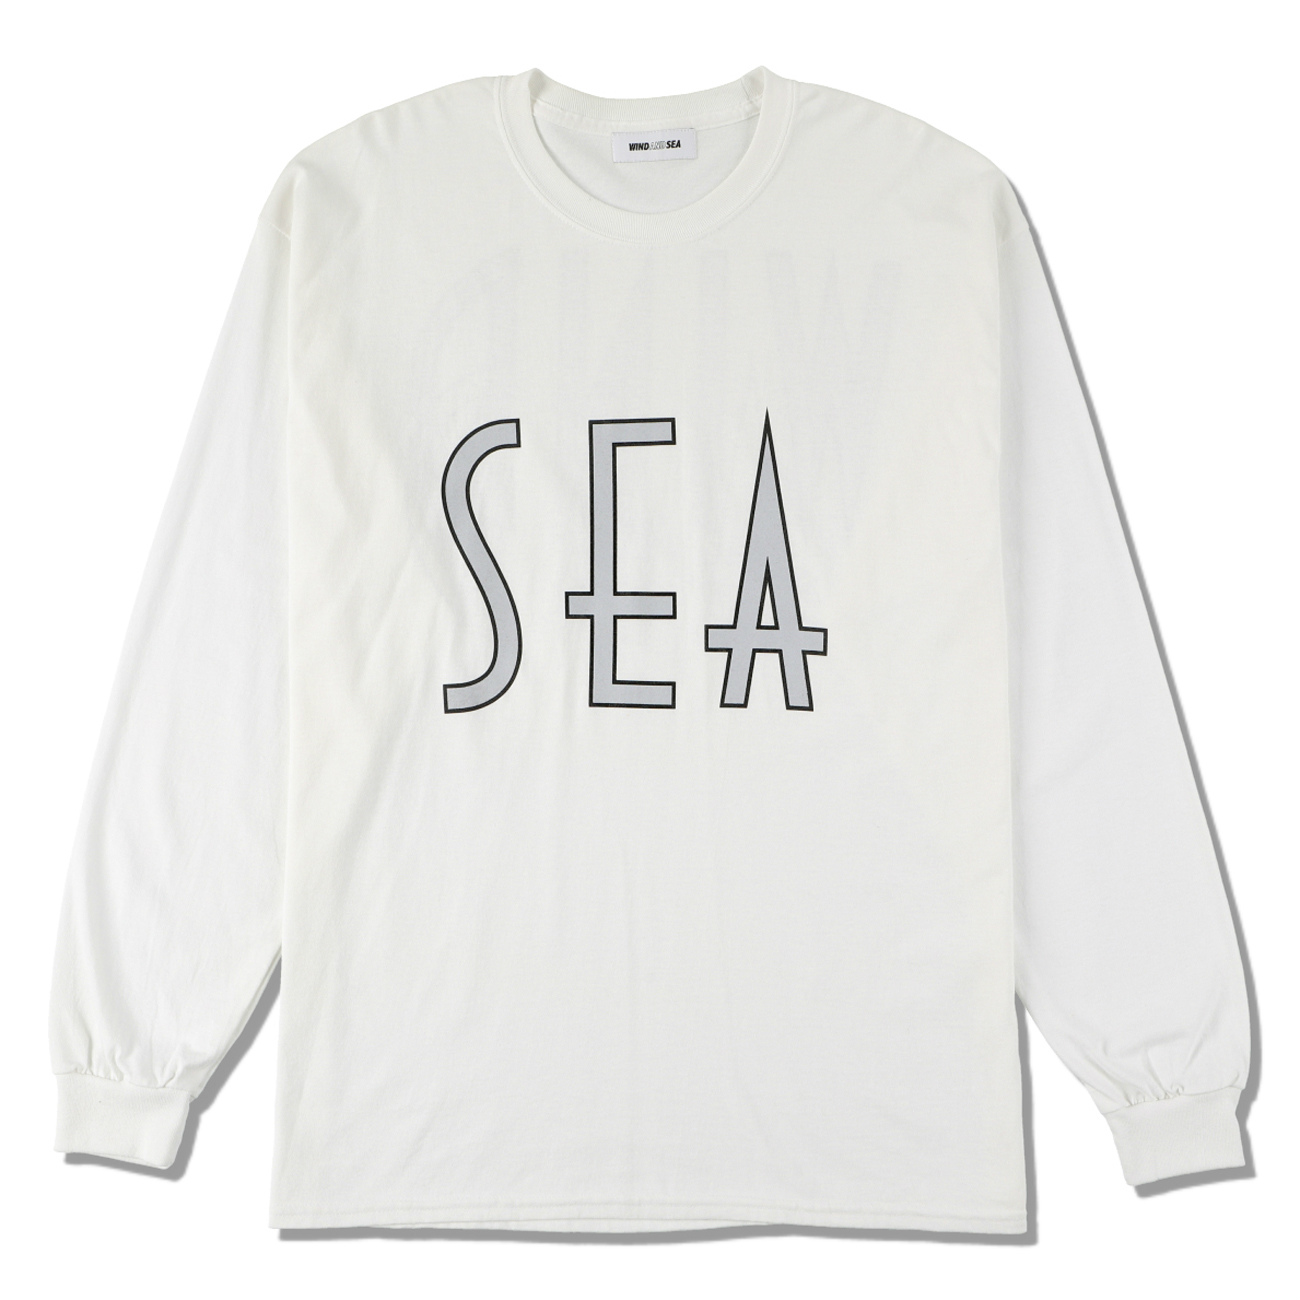 SEA (small-iridescent) T-SHIRT﻿ WHITE L